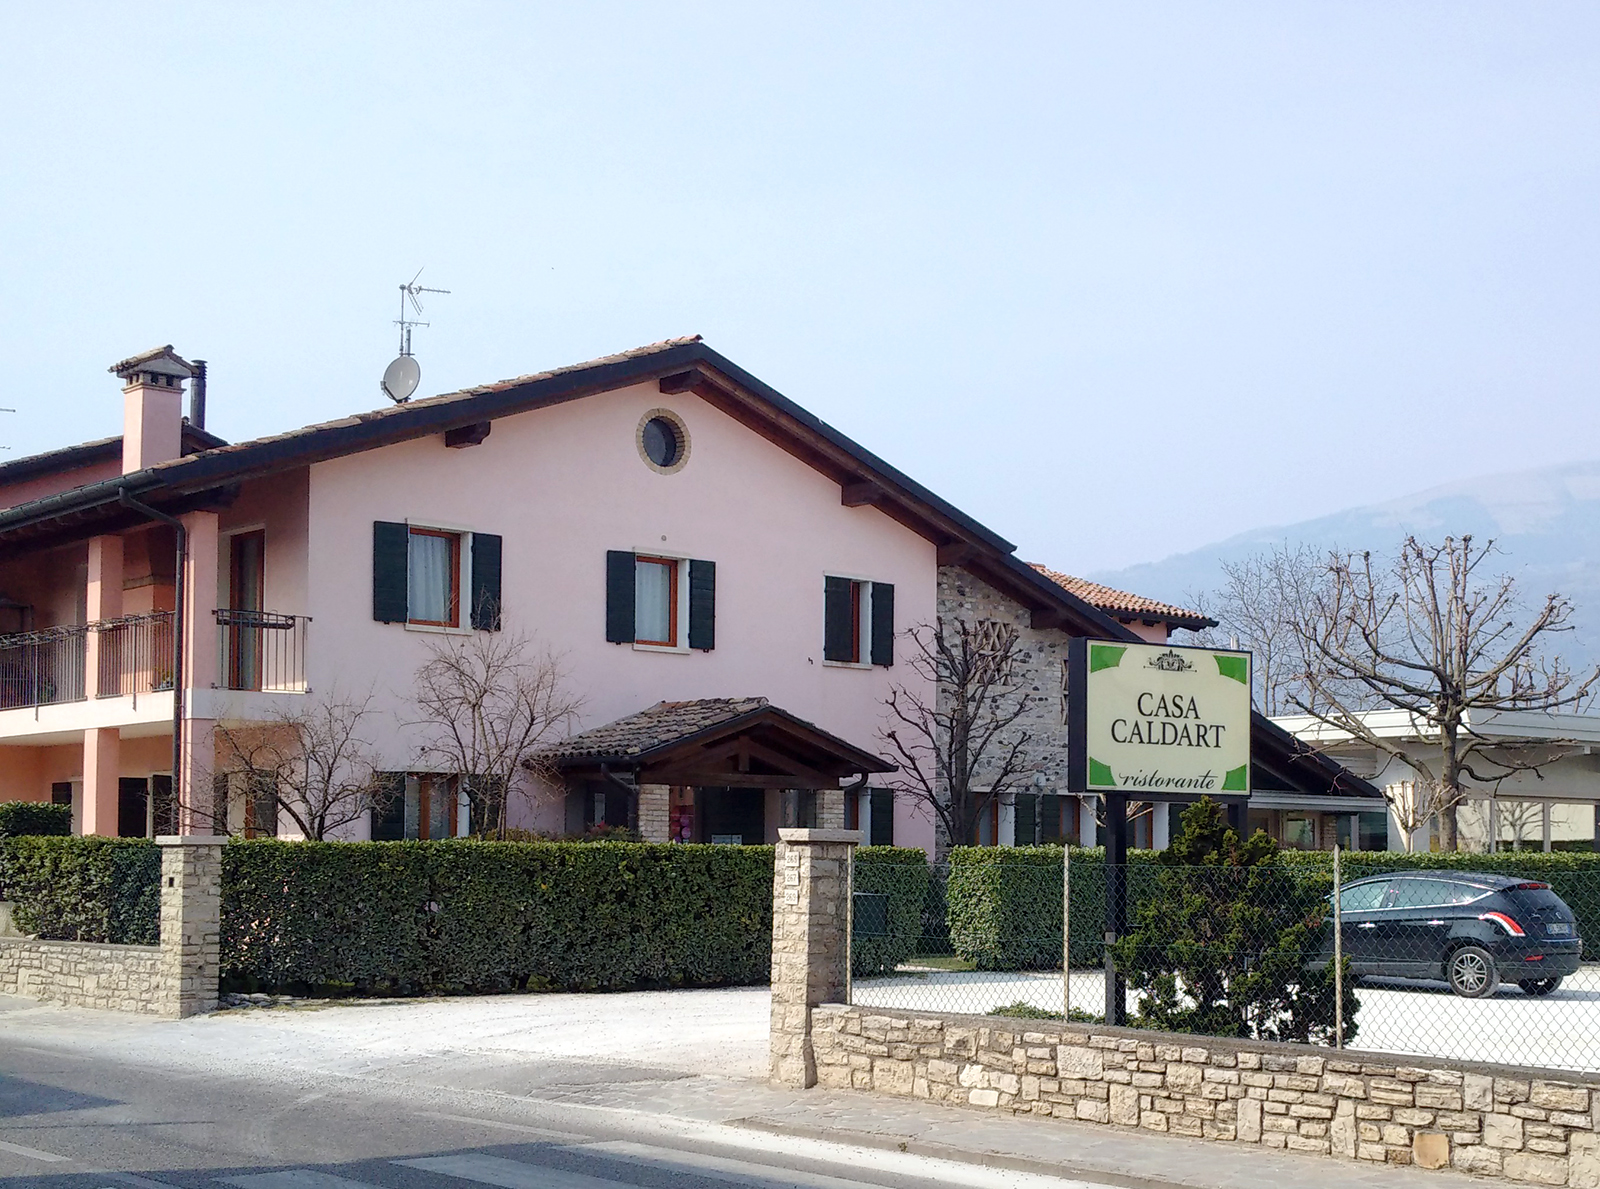 Fotovoltaico ad alta efficienza | ristorante Casa Caldart | Valdobbiadene (TV)